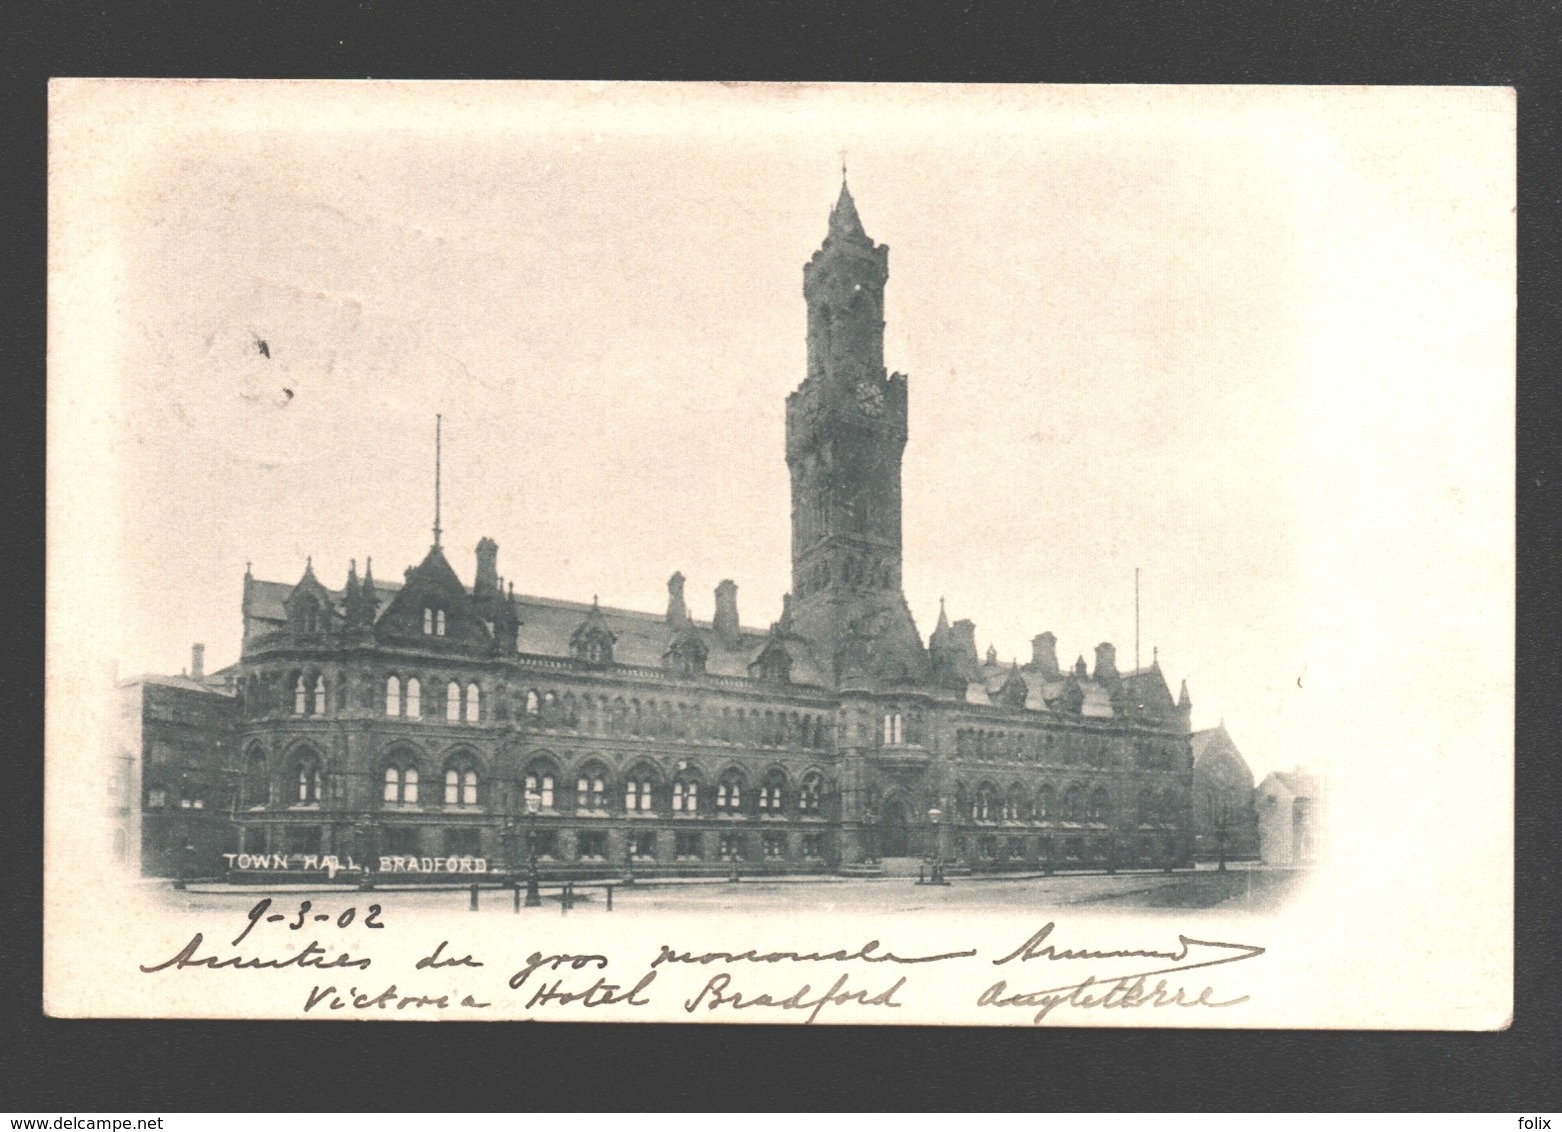 Bradford - Town Hall - Bradford